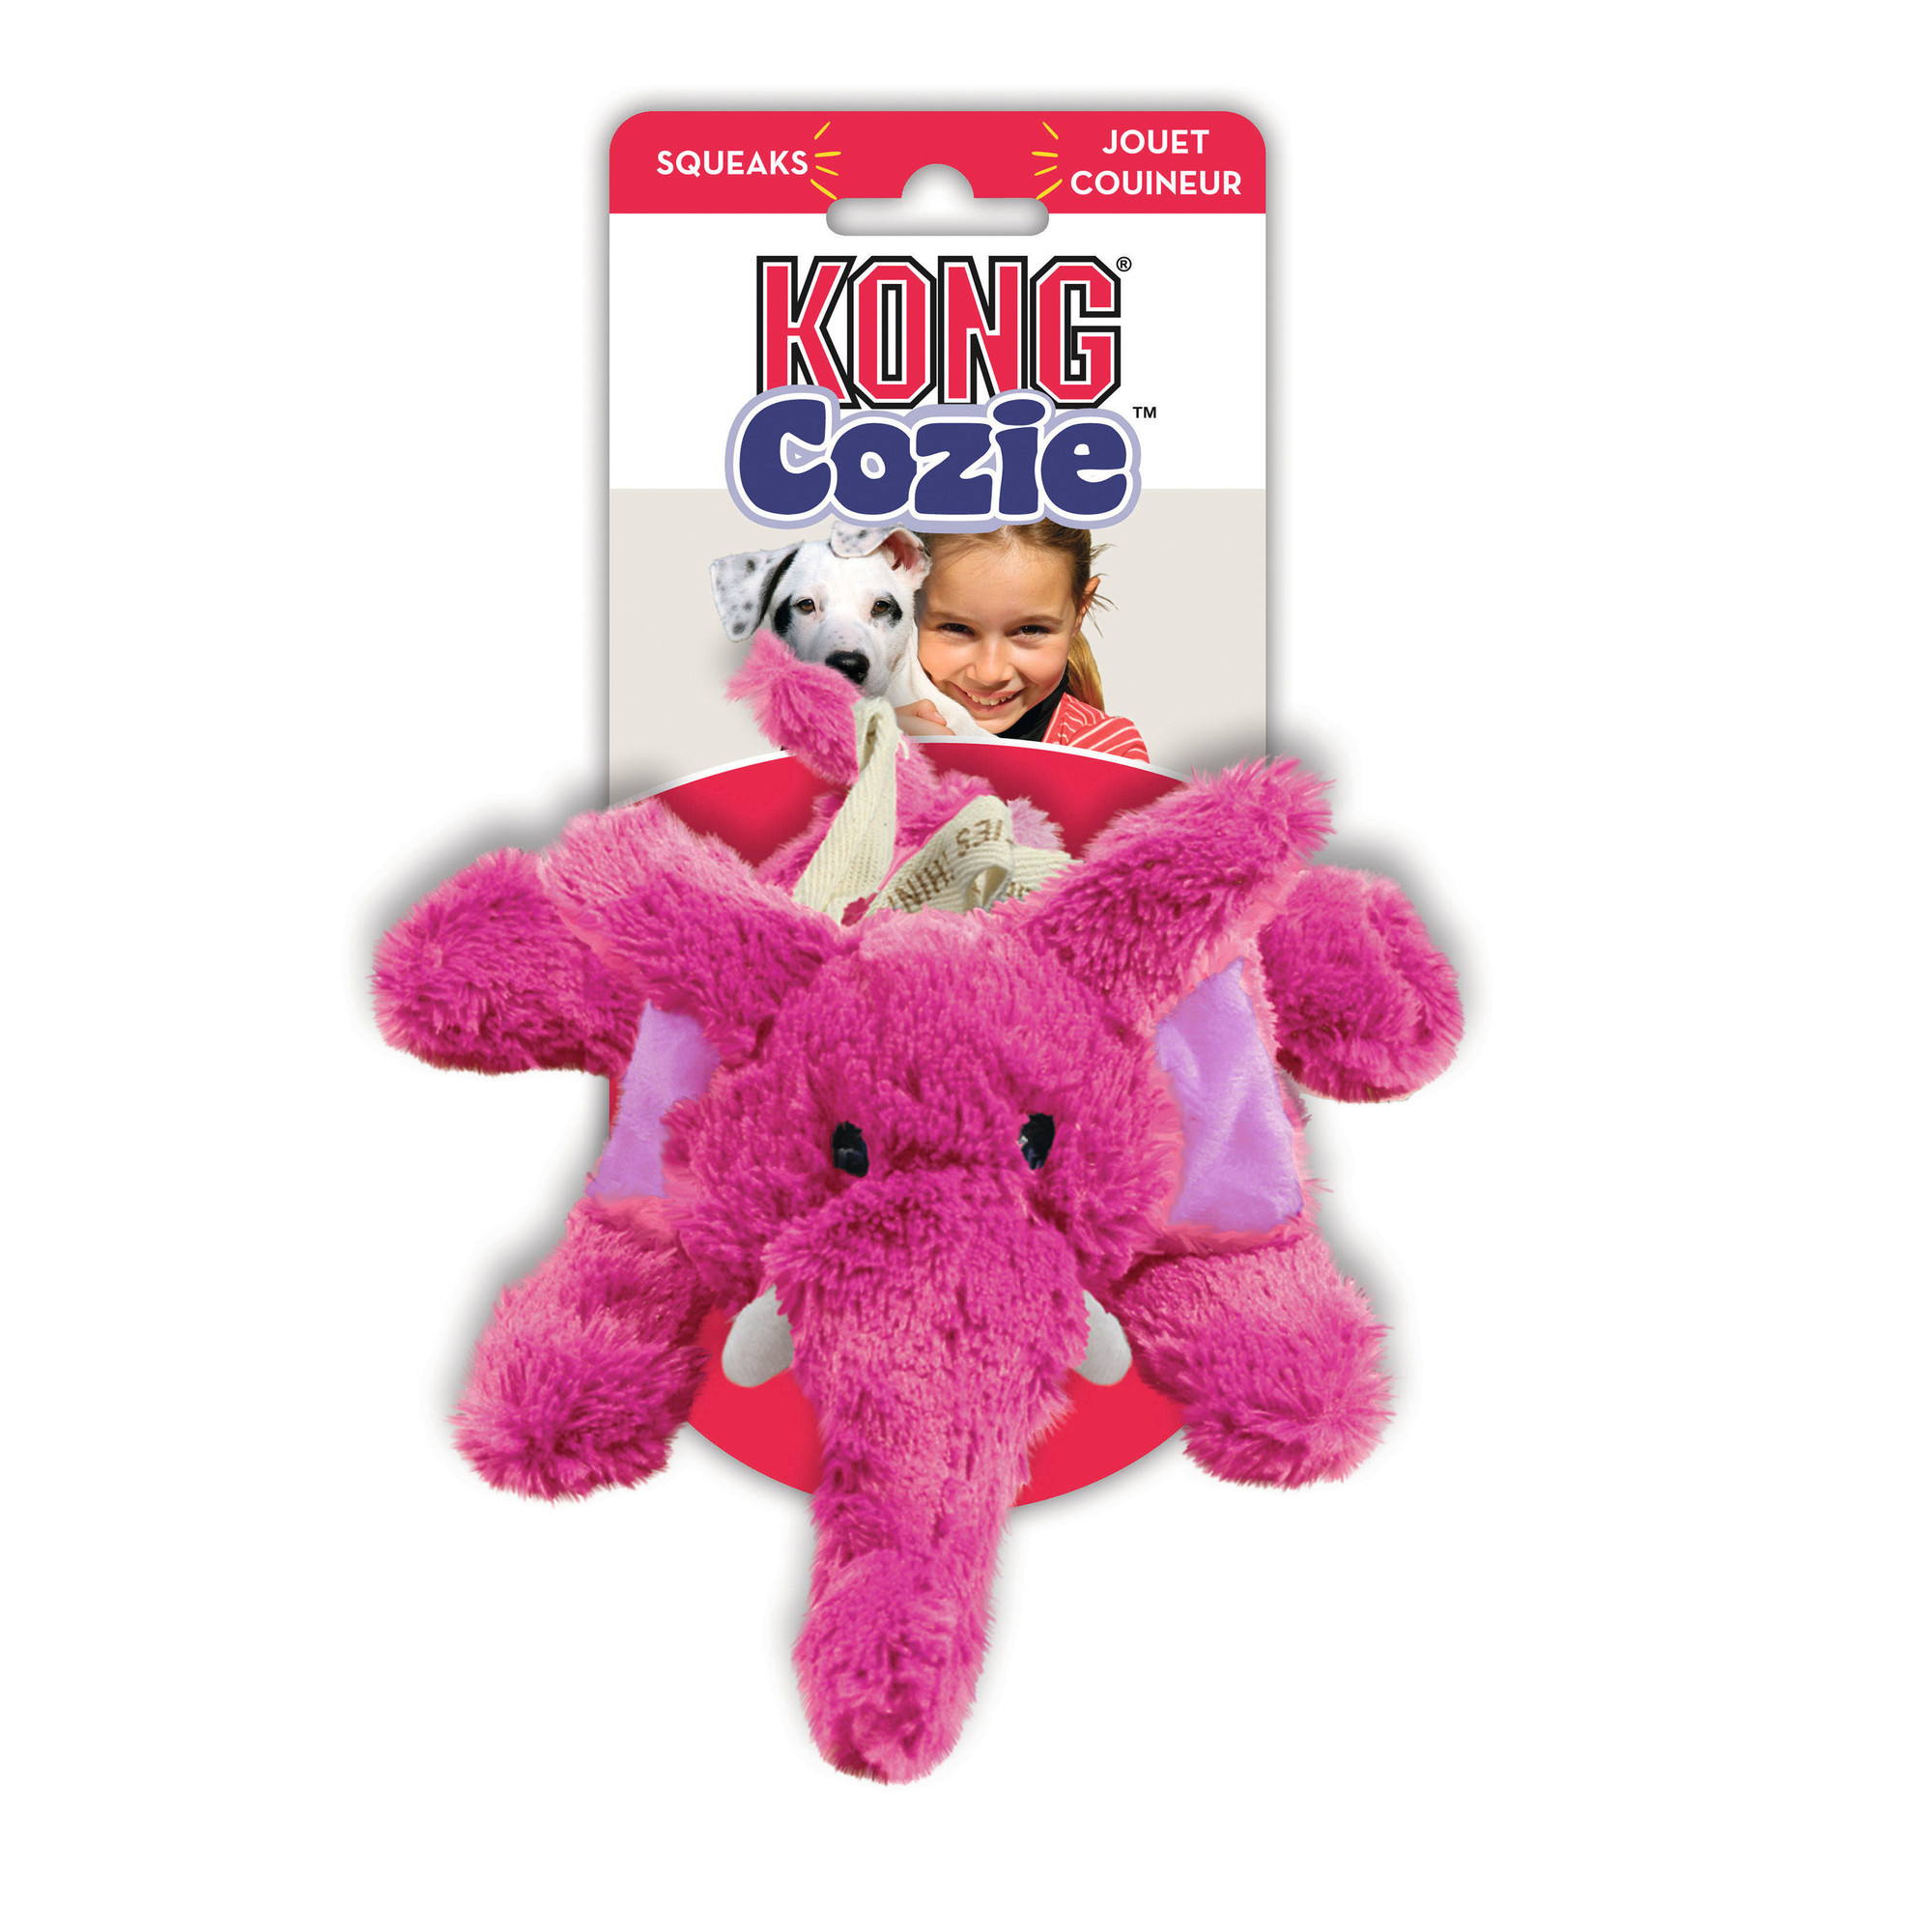 KONG Cozie - Elefant, pink